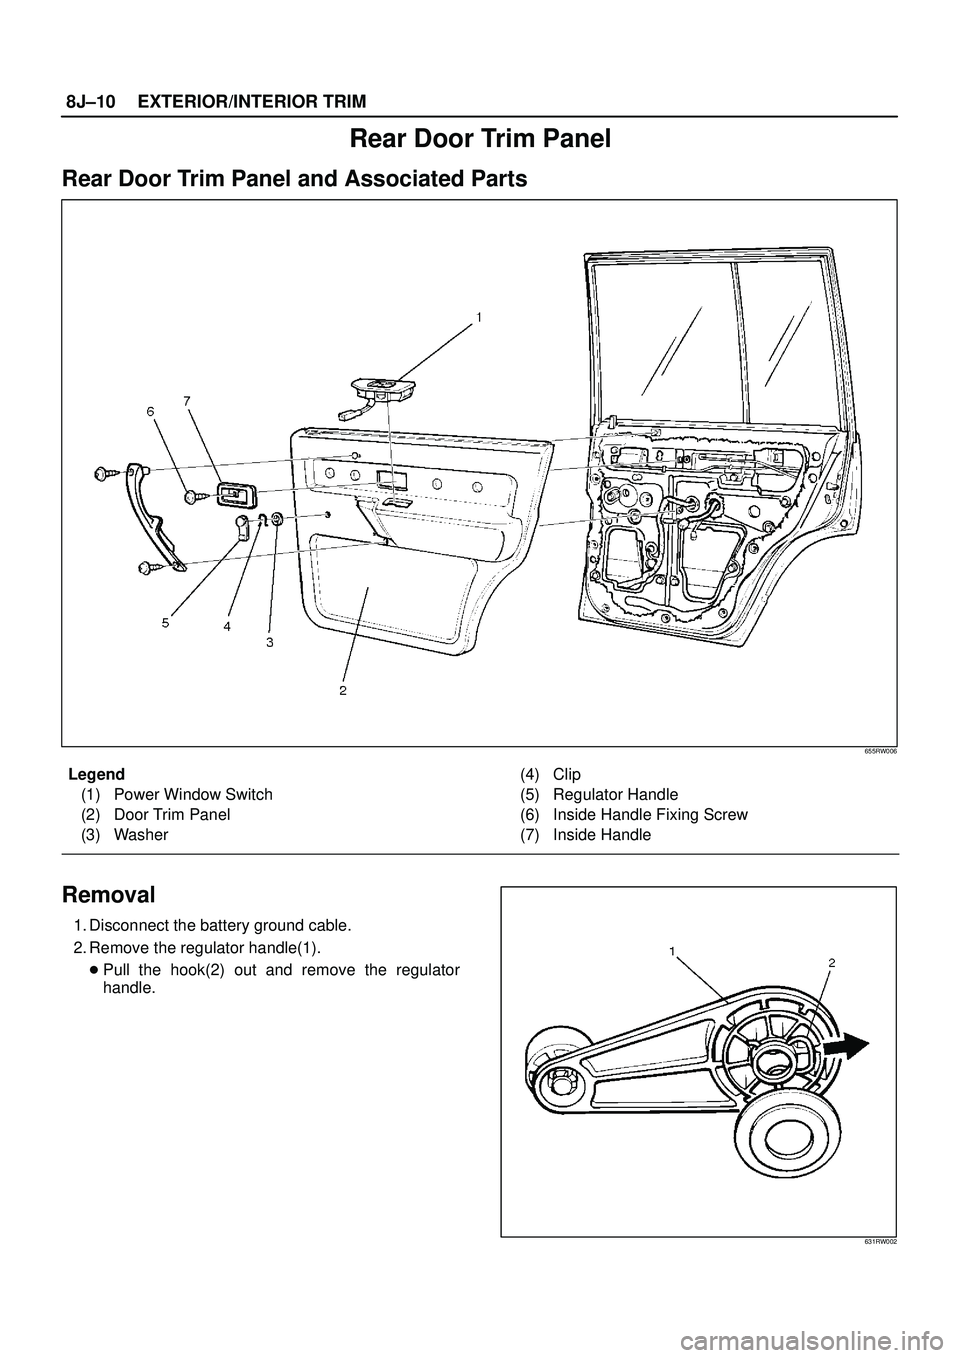 ISUZU TROOPER 1998  Service Manual PDF 8J±10EXTERIOR/INTERIOR TRIM
Rear Door Trim Panel
Rear Door Trim Panel and Associated Parts
655RW006
Legend
(1) Power Window Switch
(2) Door Trim Panel
(3) Washer(4) Clip
(5) Regulator Handle
(6) Insi